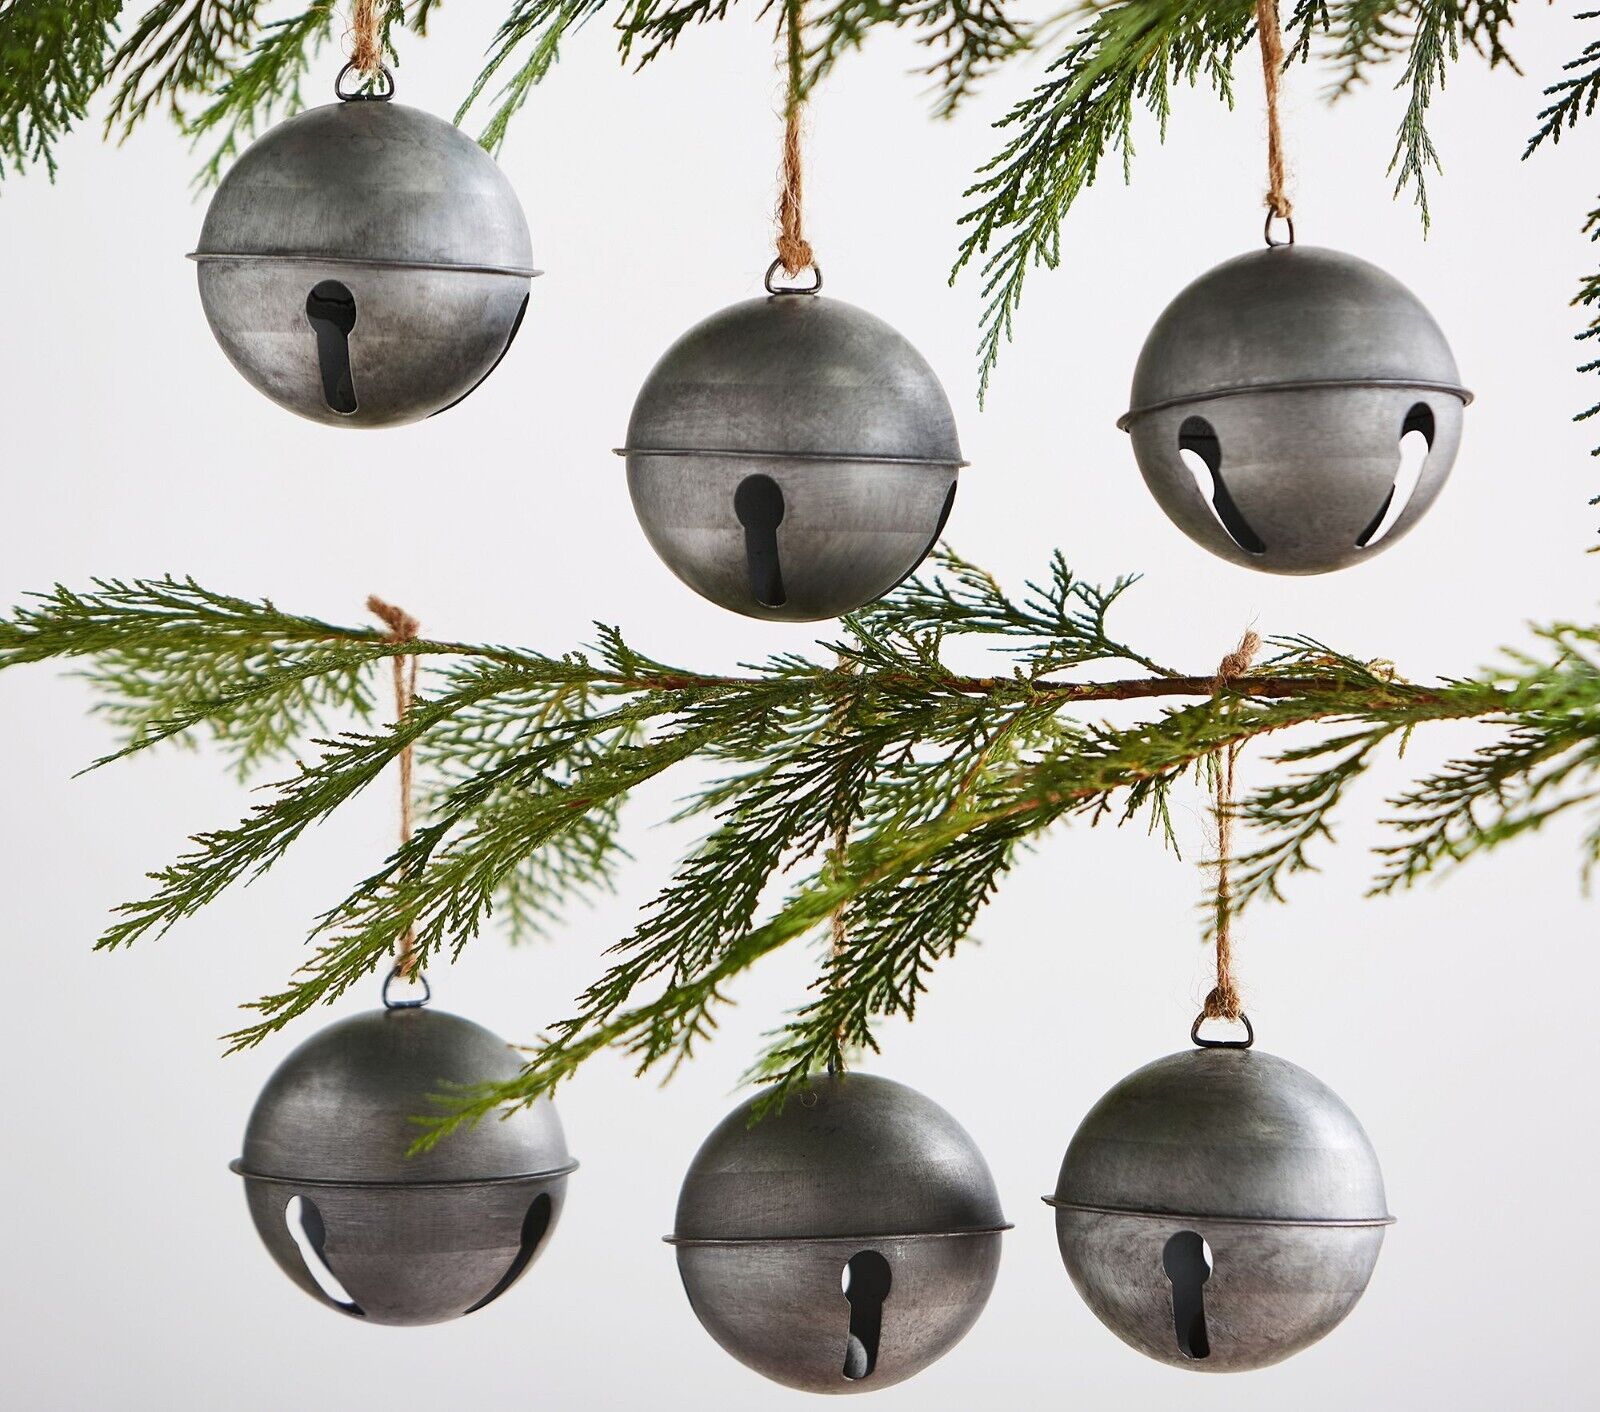 Pottery Barn Jingle Bell Ornaments Silvertone Set of 6 NEW IN BOX